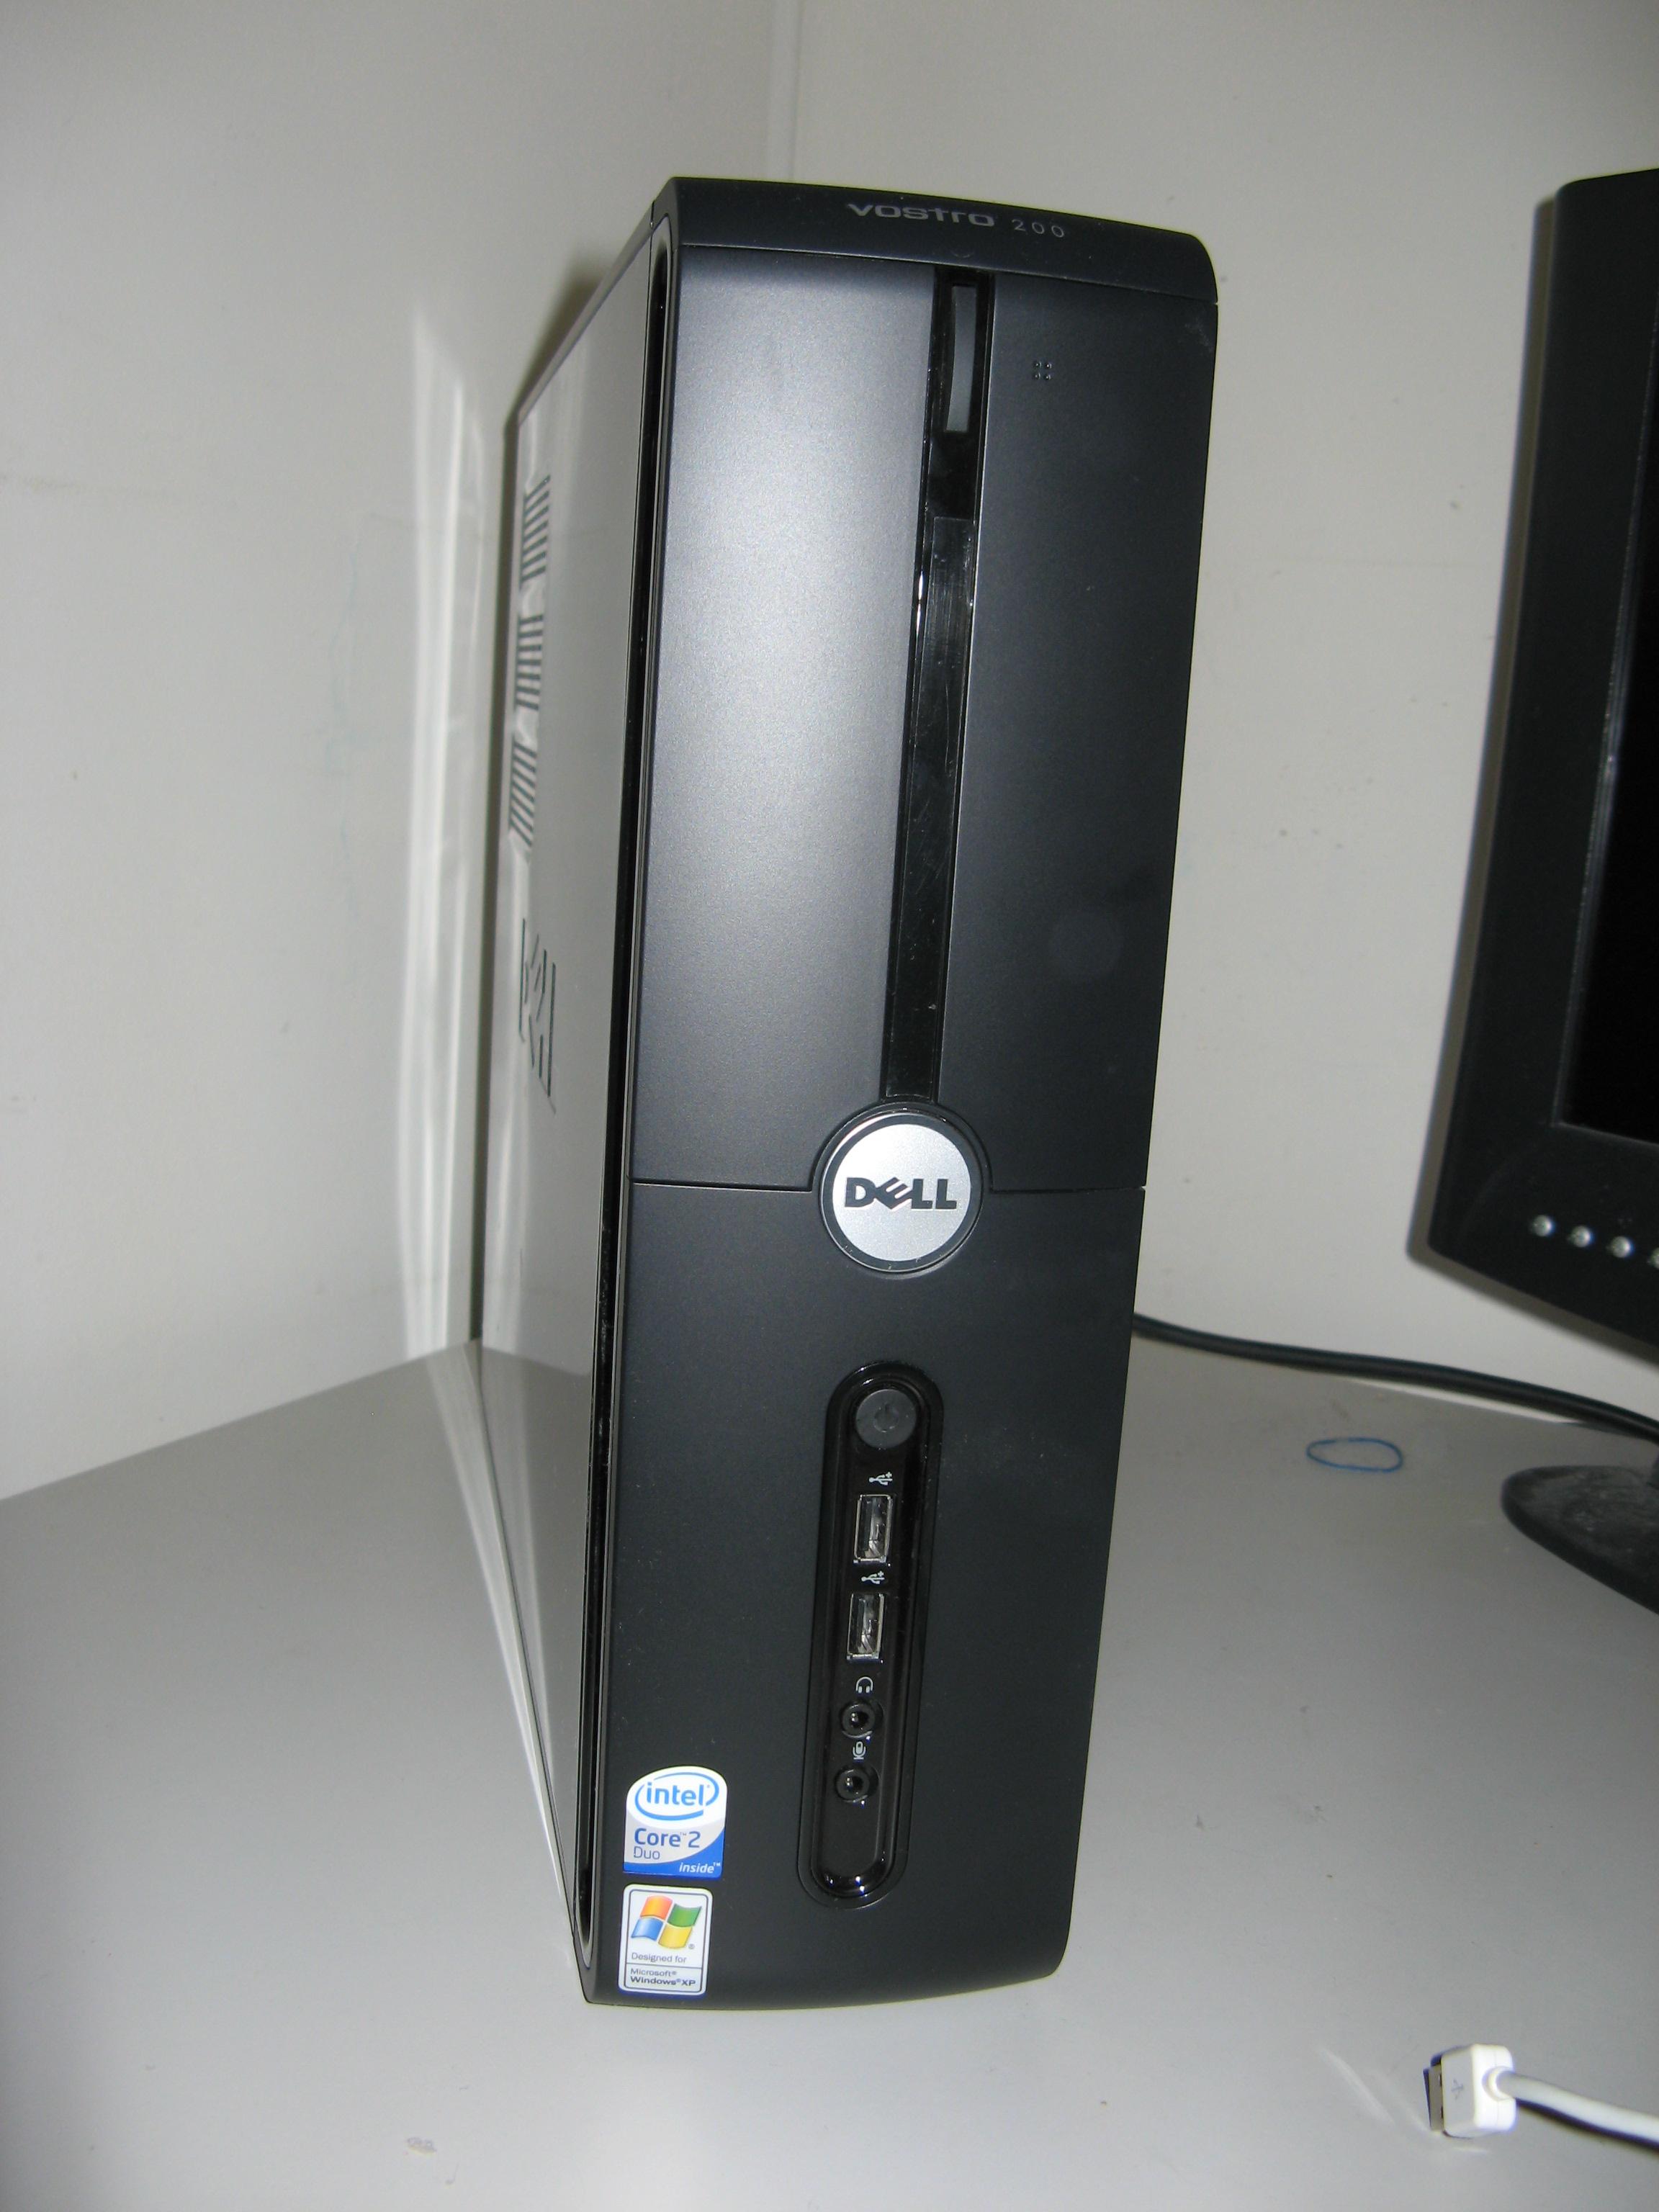 Review of the Dell Vostro Slimline 200 Desktop With Intel E4500